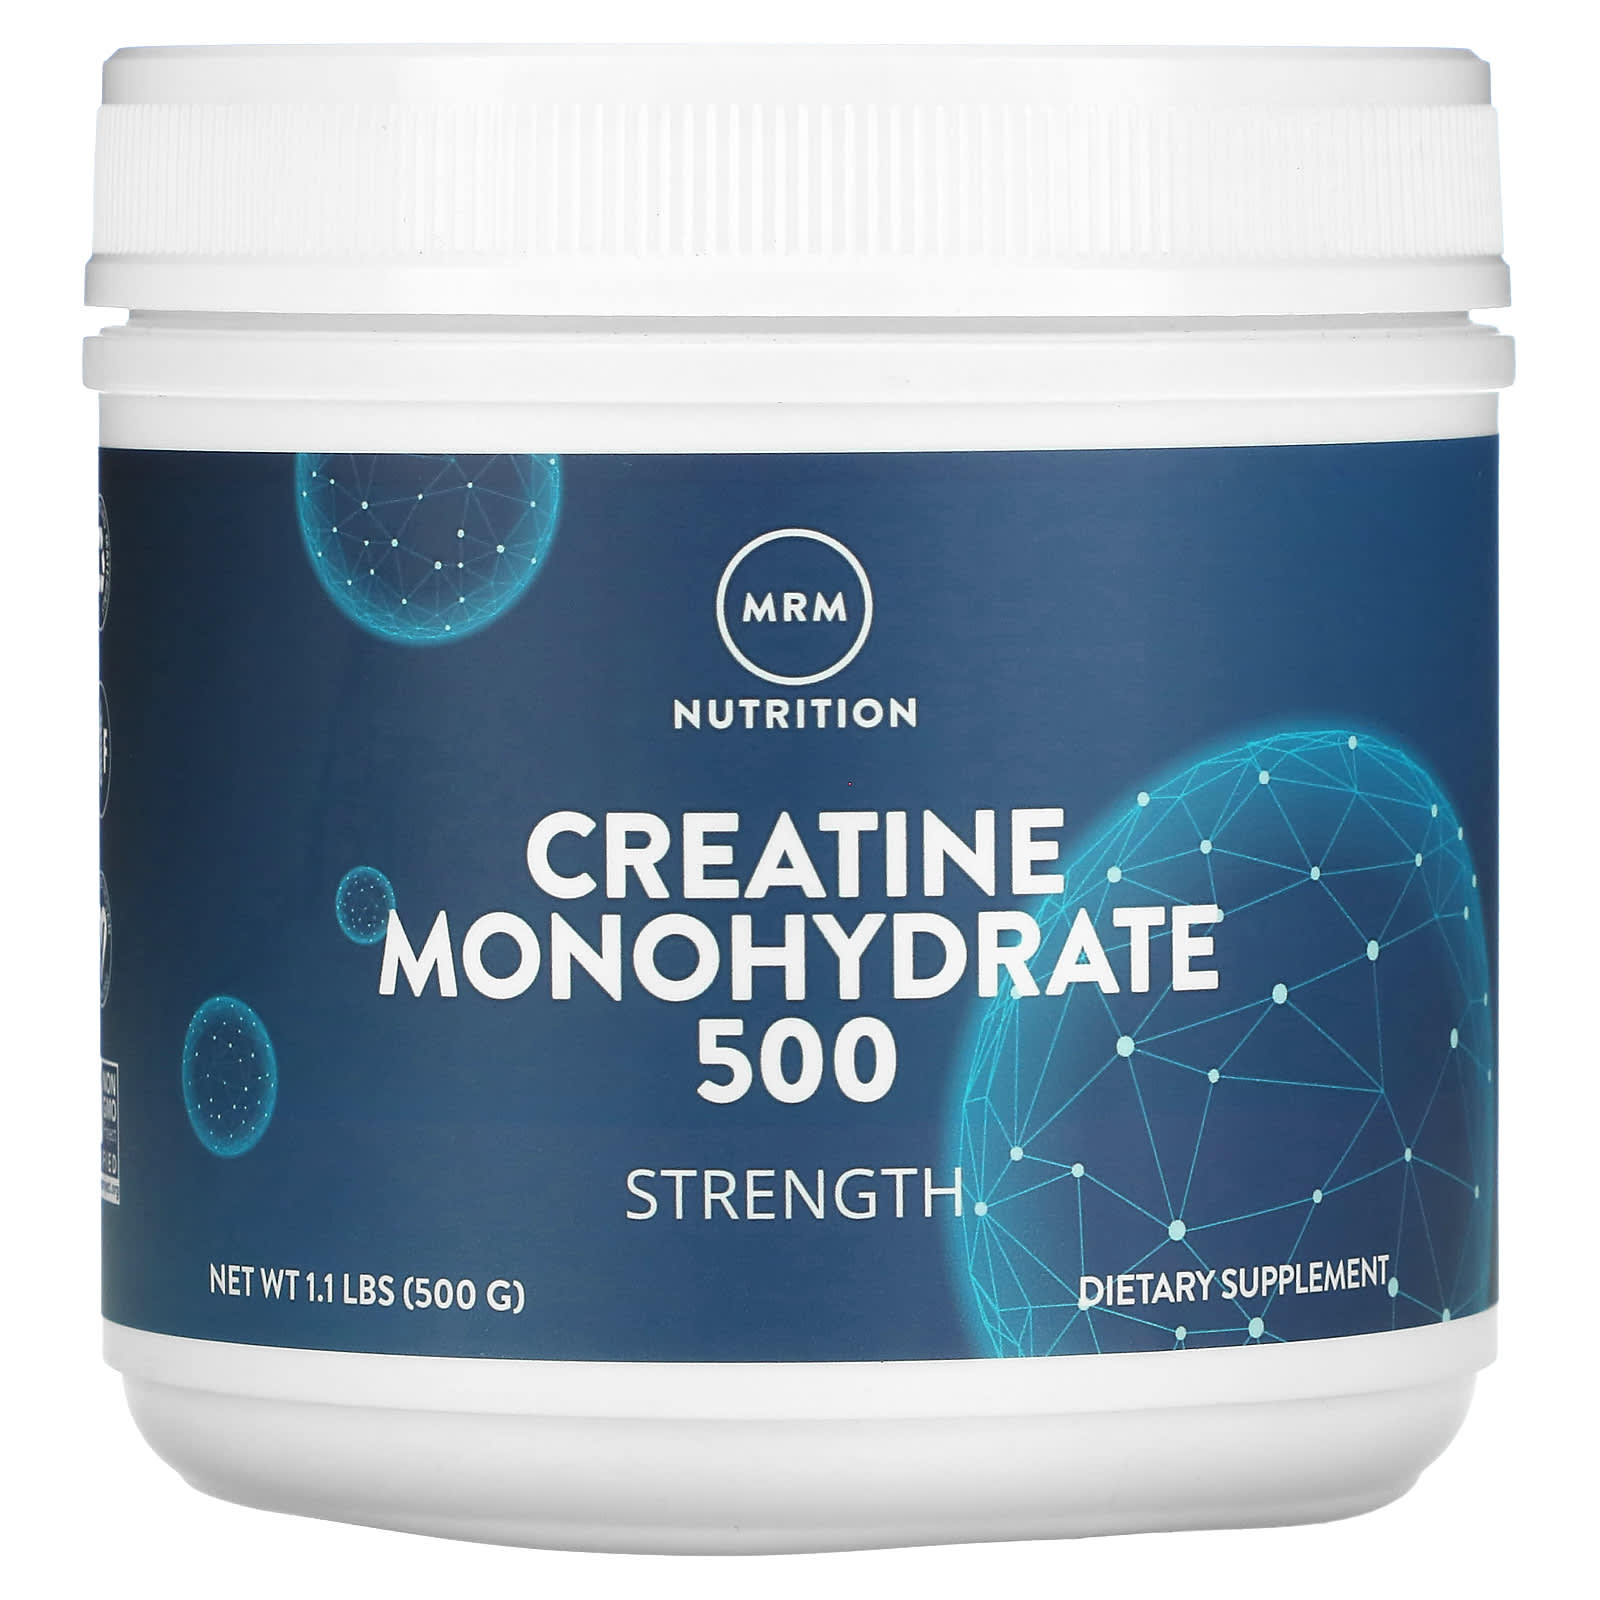 Моногидрат Креатина 500 MRM Nutrition, 500 г nutricost performance моногидрат креатина без добавок 5 г 500 г